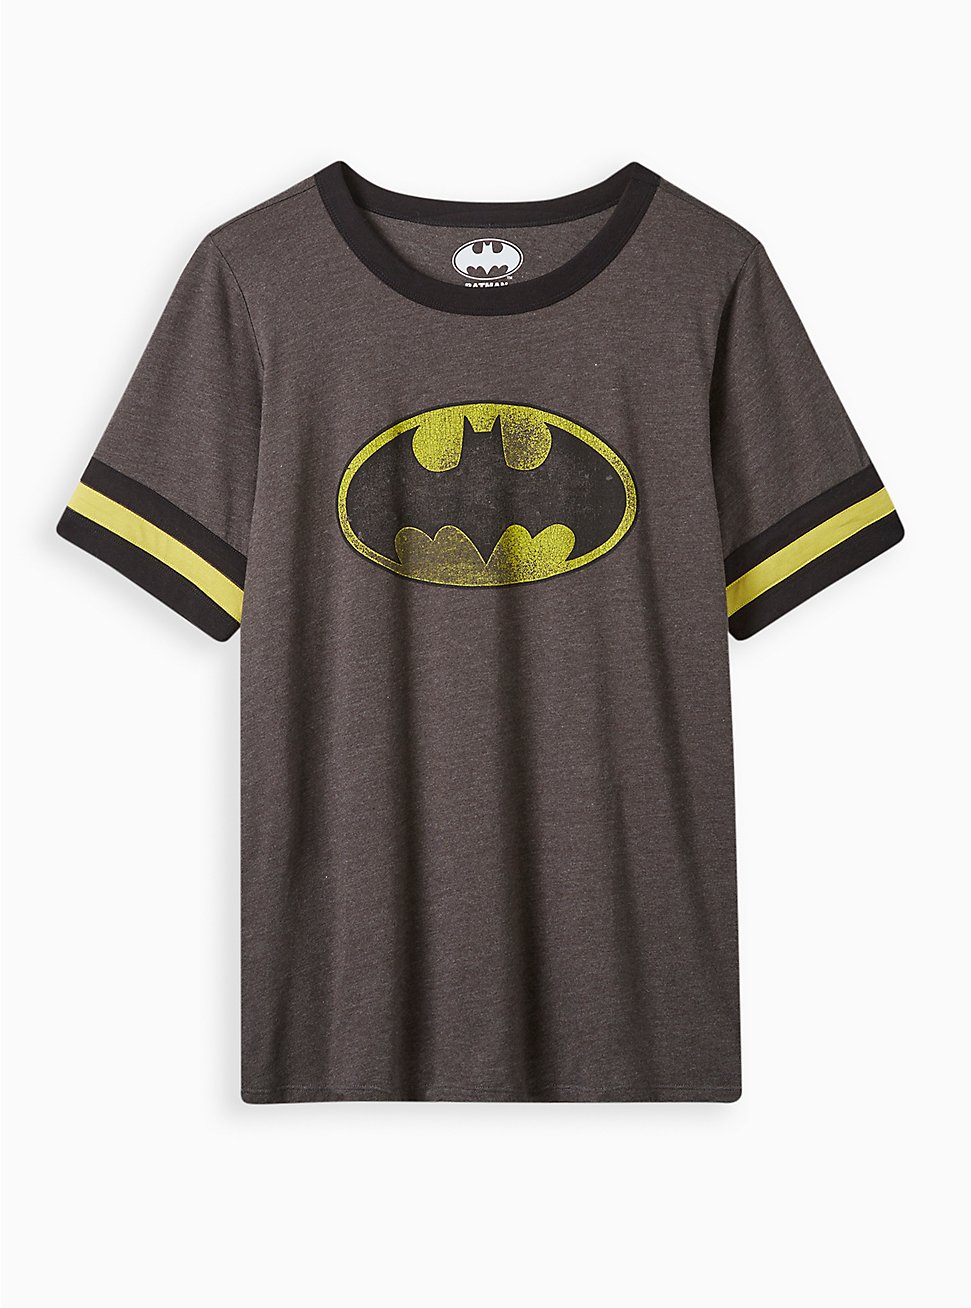 Plus Size Batman Classic Fit Ringer Top - Cotton Grey, GREY, hi-res